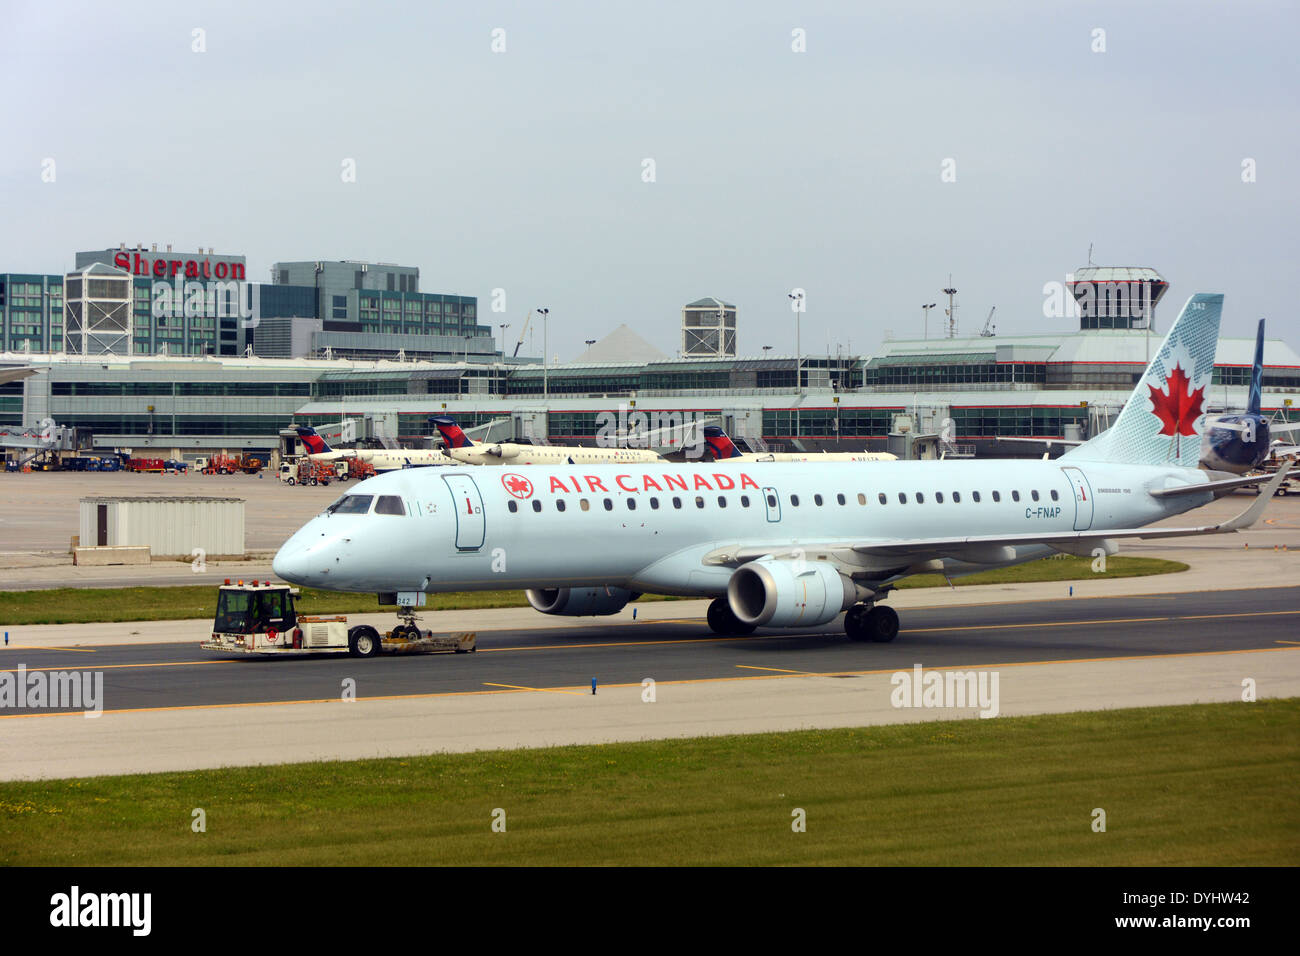 Air Canada airplane In Pearson airport, Ontario, Canada Stock Photo